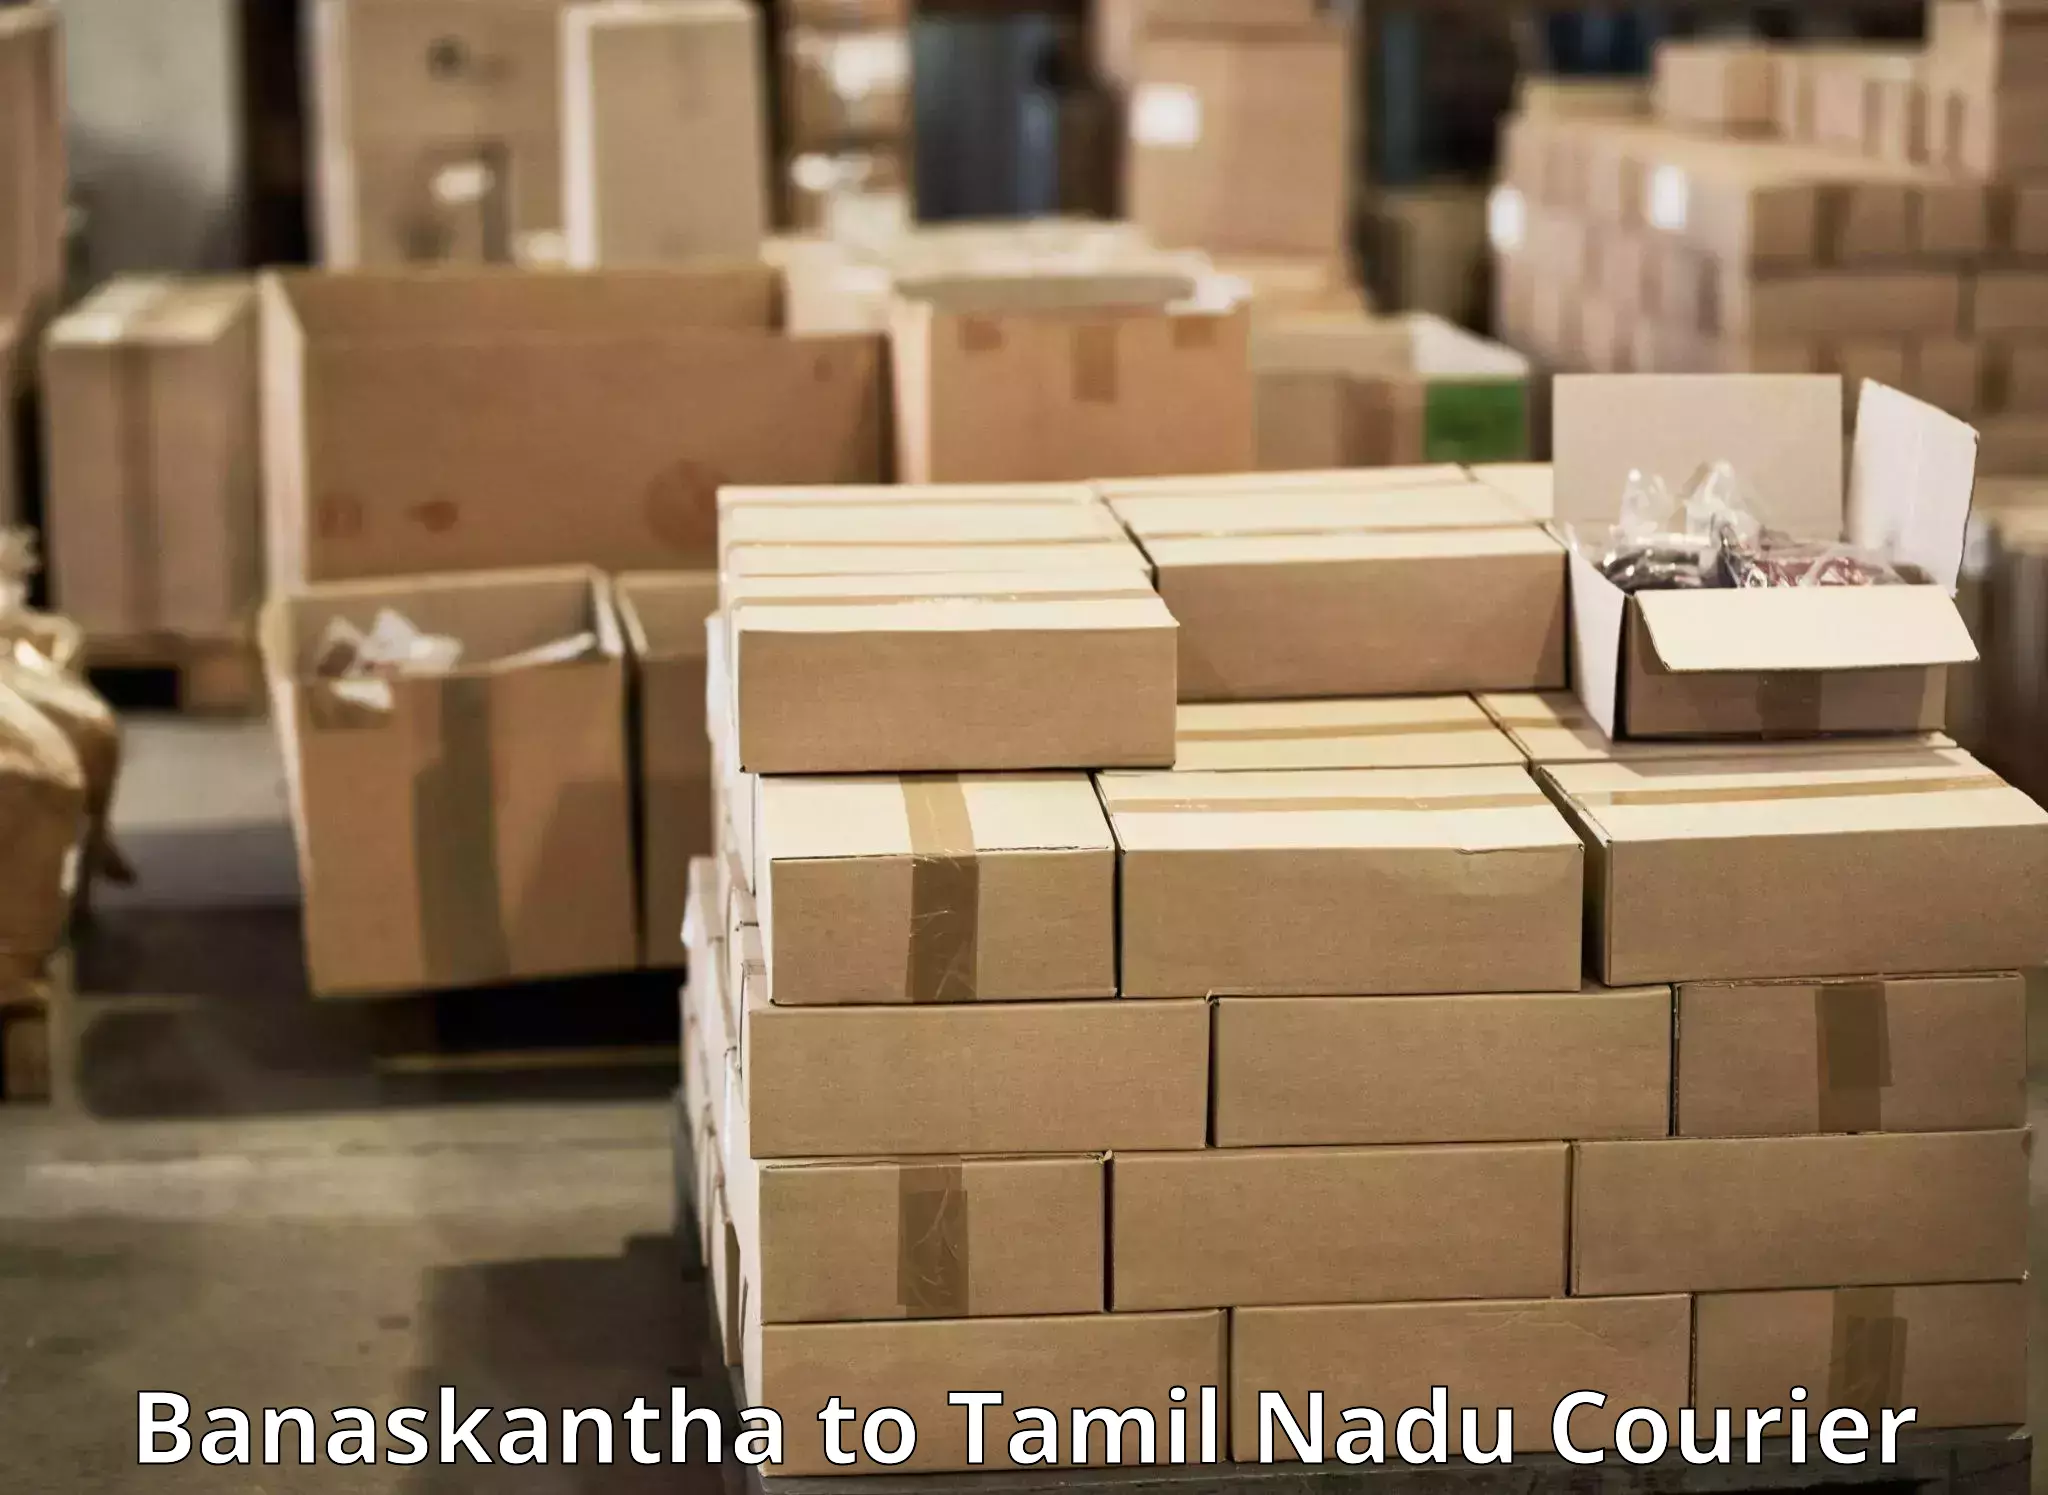 User-friendly courier app Banaskantha to Chennai Port